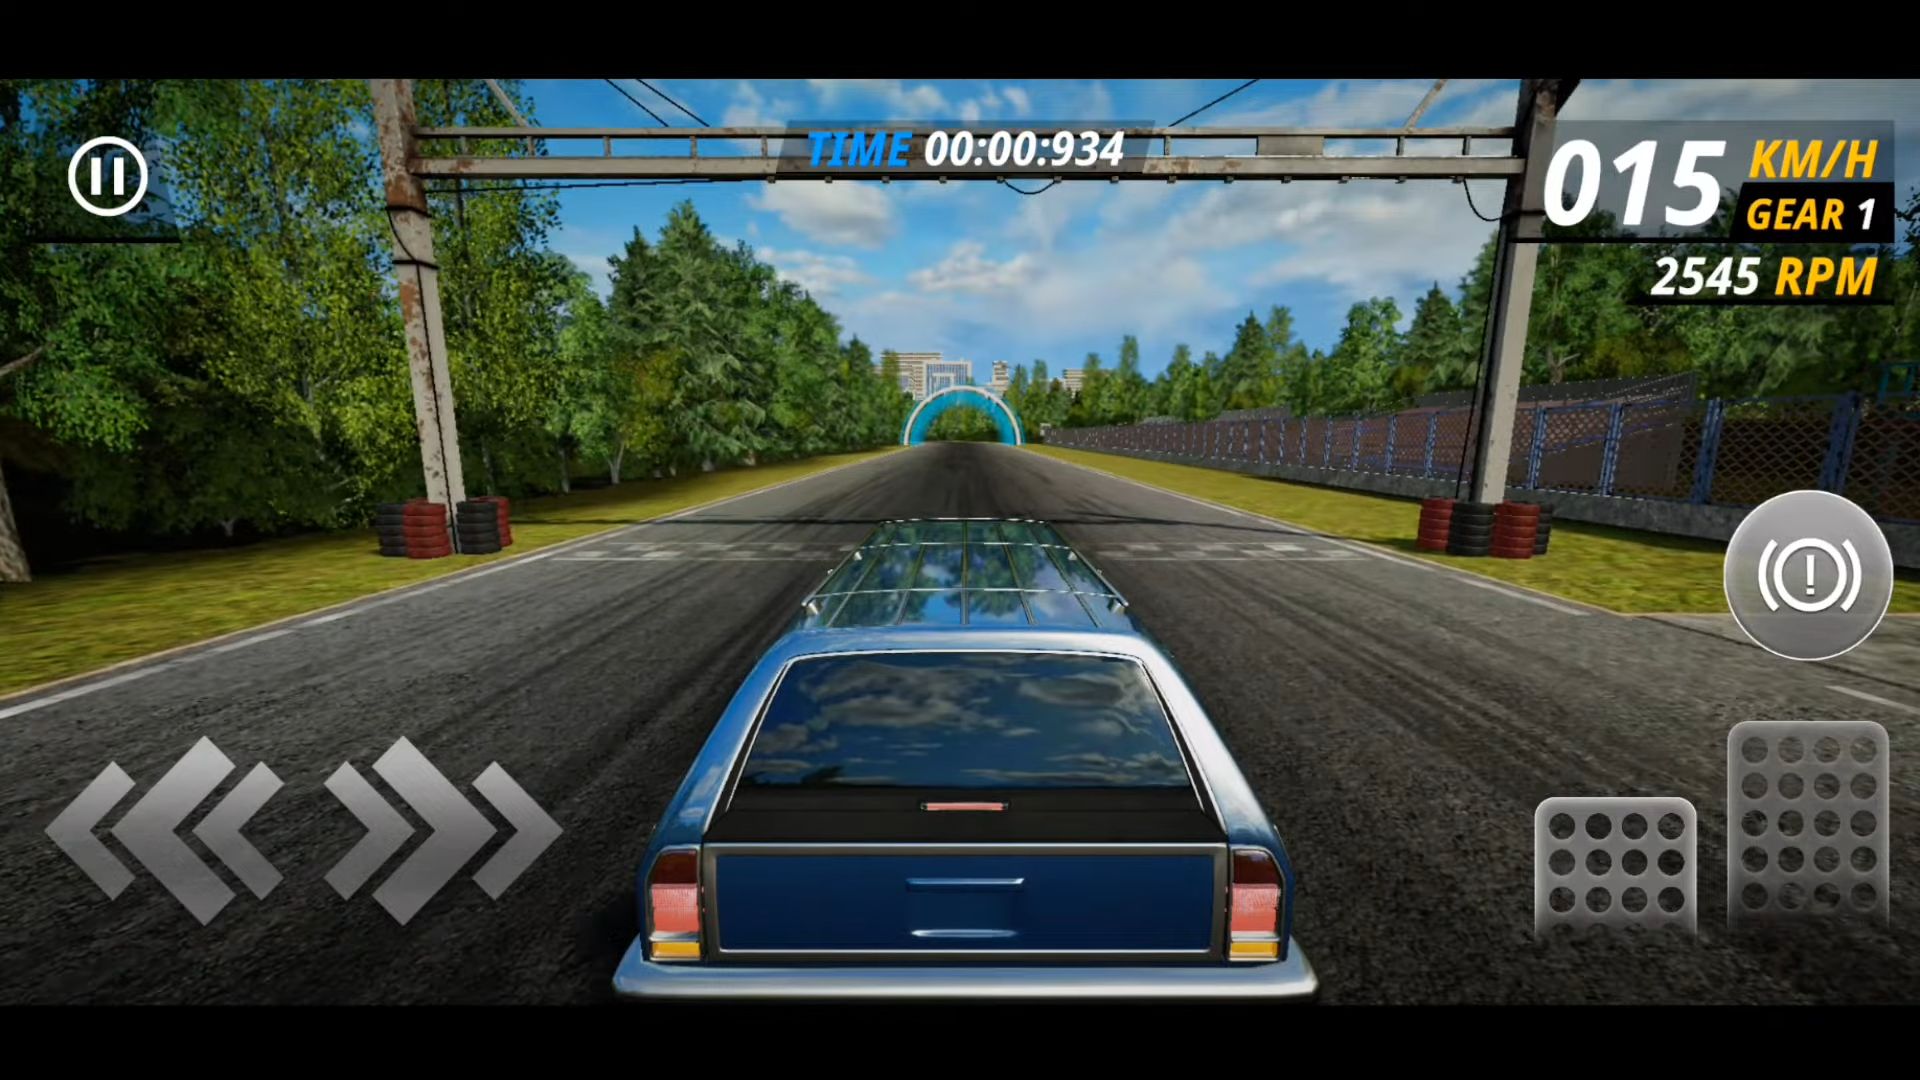 Car Mechanic Simulator Racing for Android